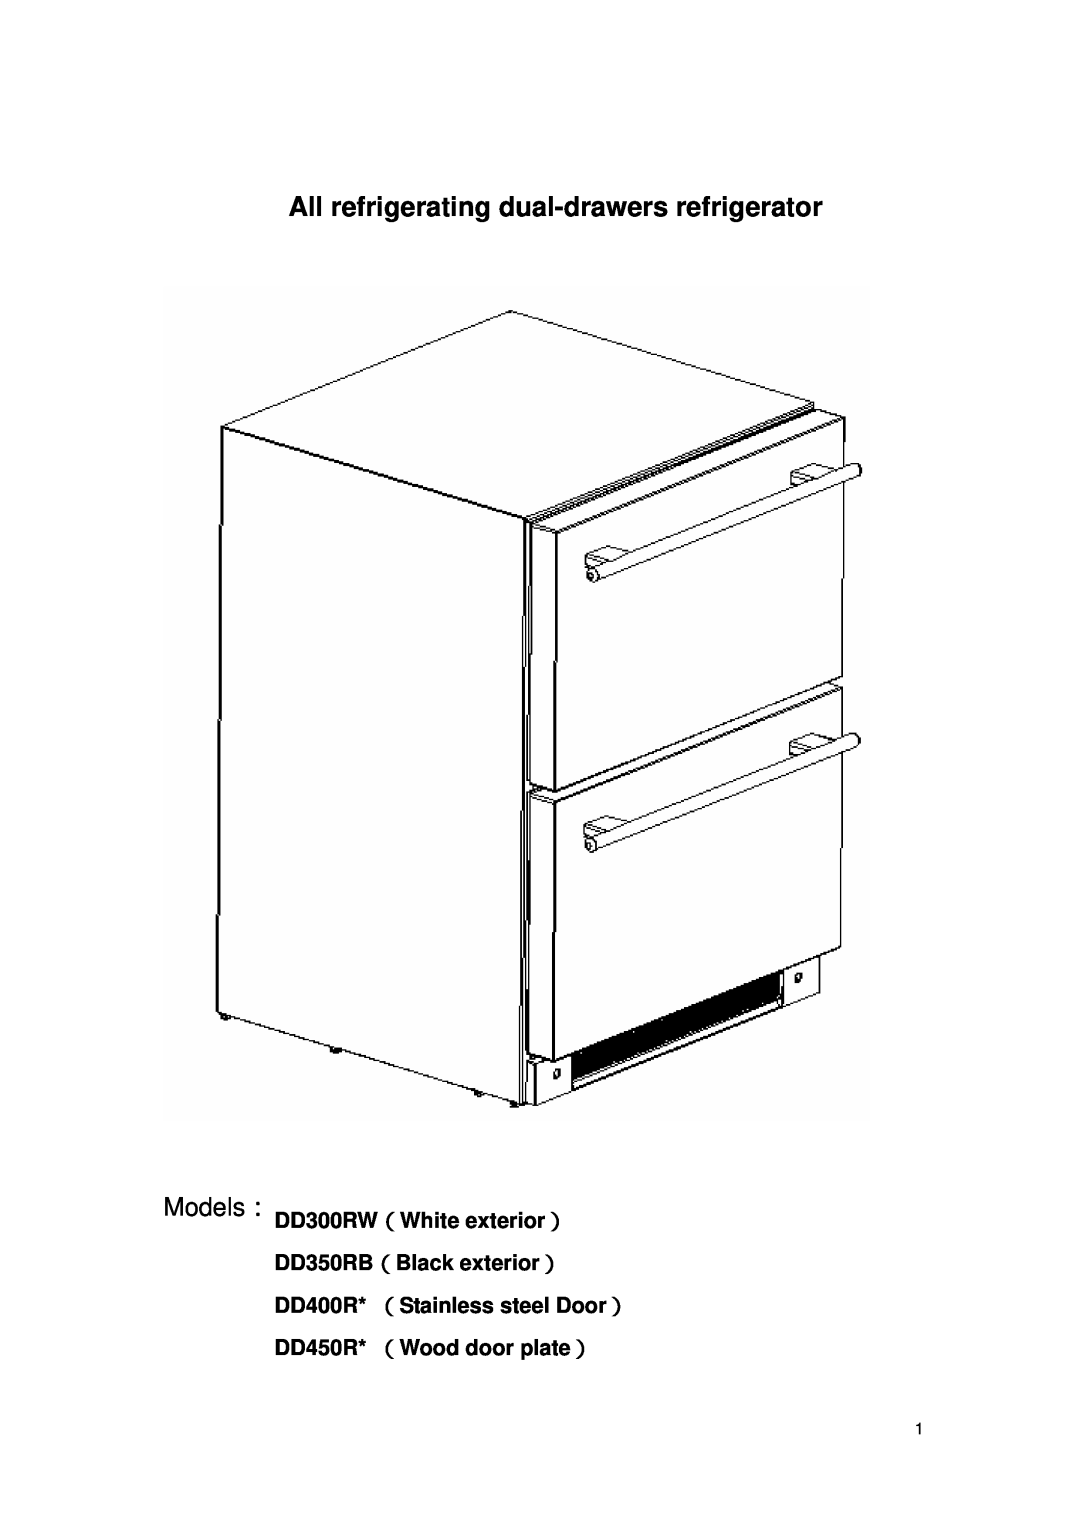 Haier DD400R* manual All refrigerating dual-drawersrefrigerator, Models：DD300RW（White exterior）, DD350RB（Black exterior） 